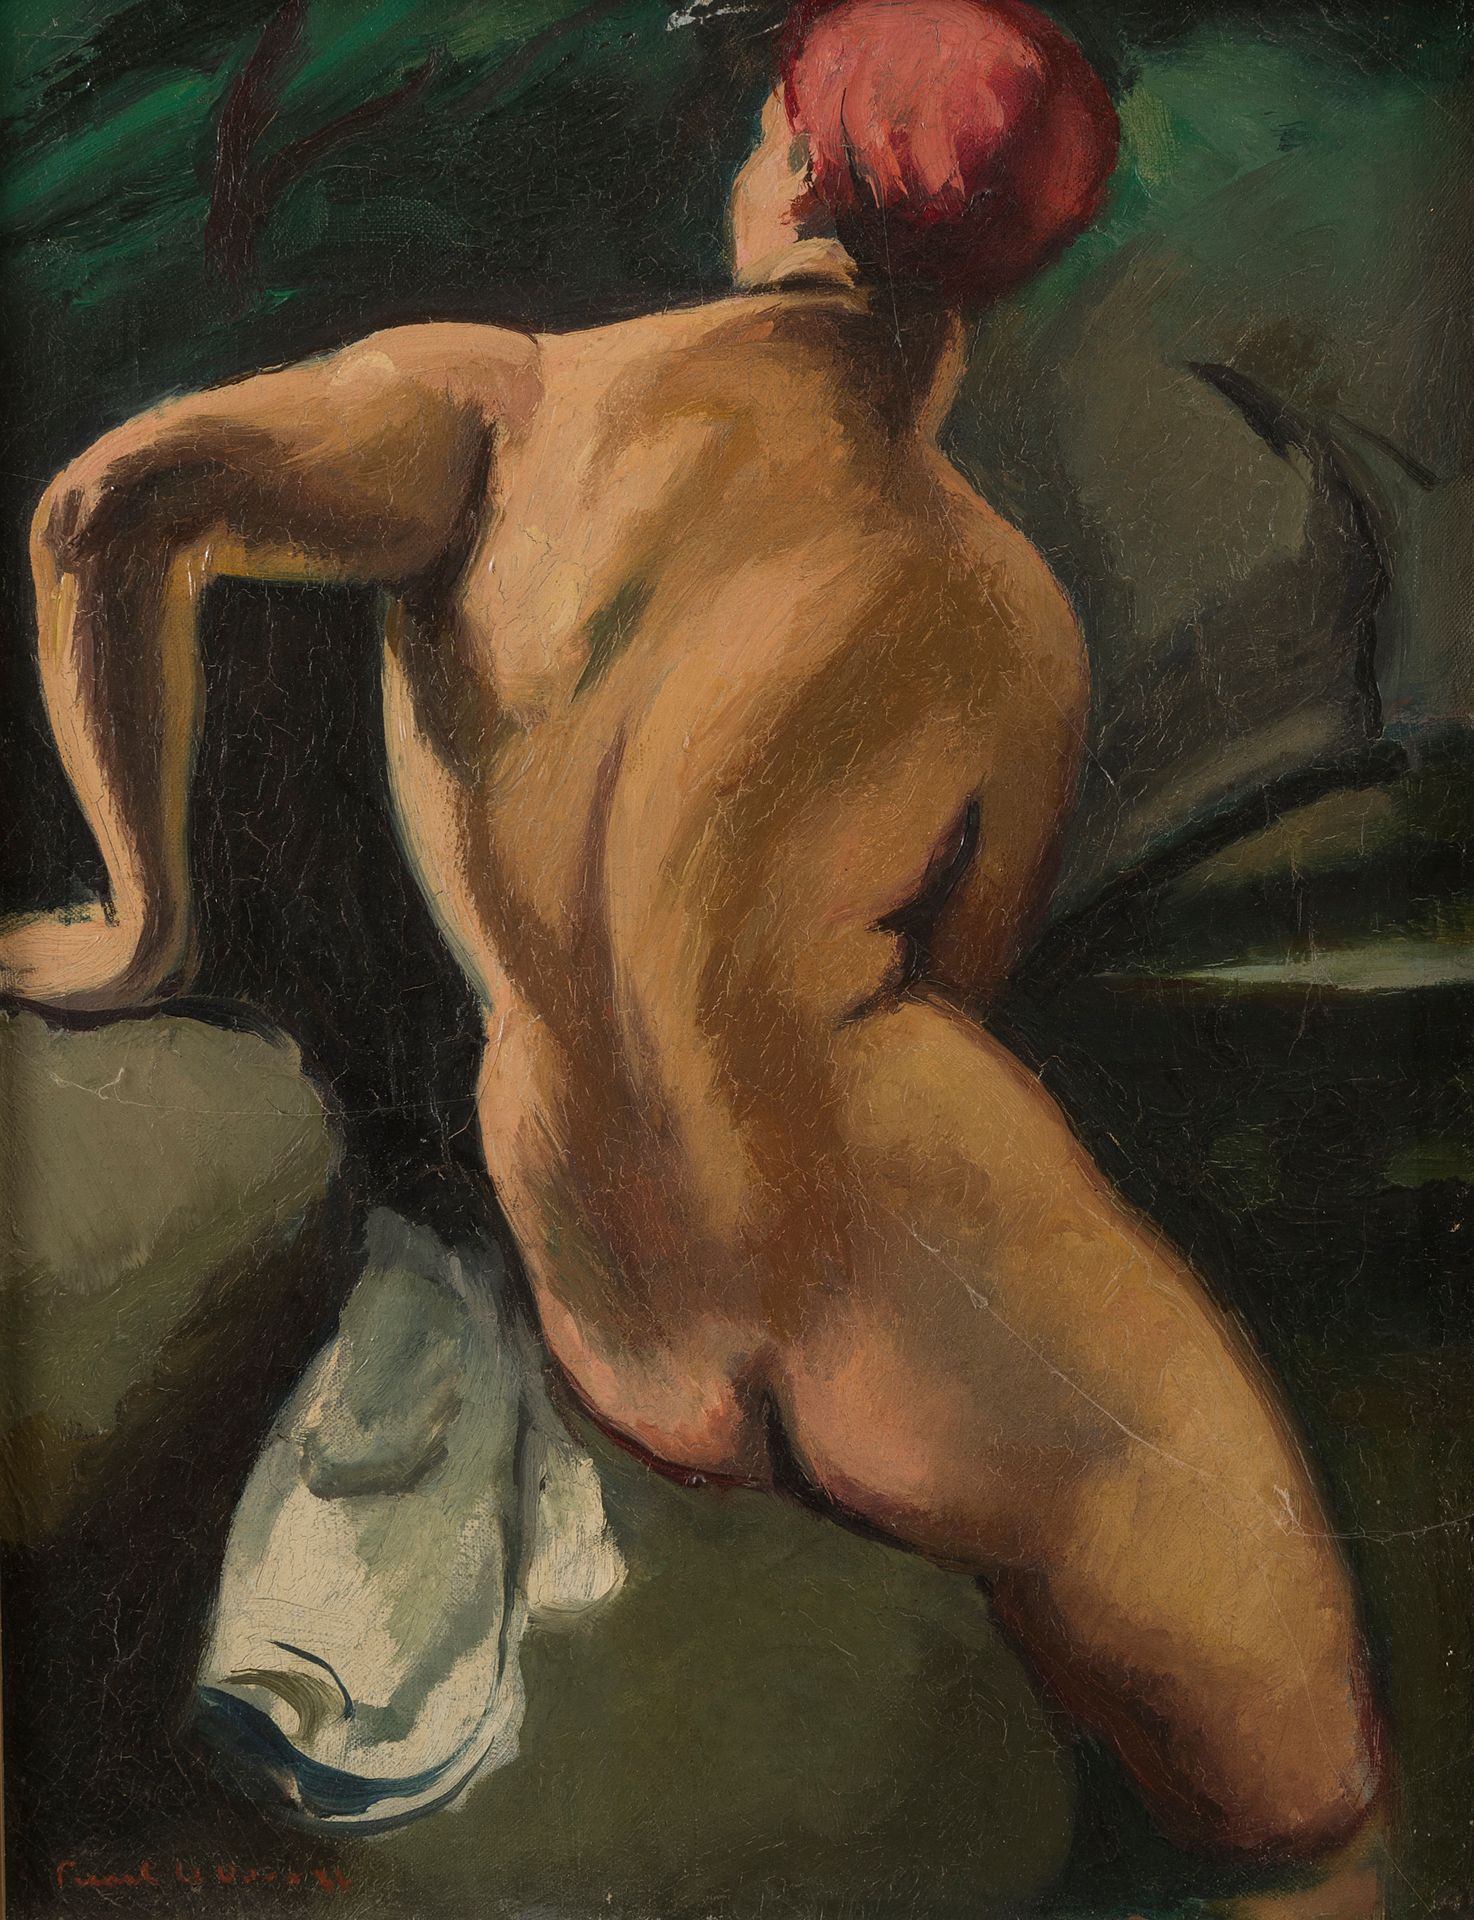 Null 查尔斯-皮卡特-勒杜(1881-1959)
裸露的背部
布面油画，左下角有签名（小缺口）
35 x 27 cm

注:
赠送于秋季沙龙-大皇宫